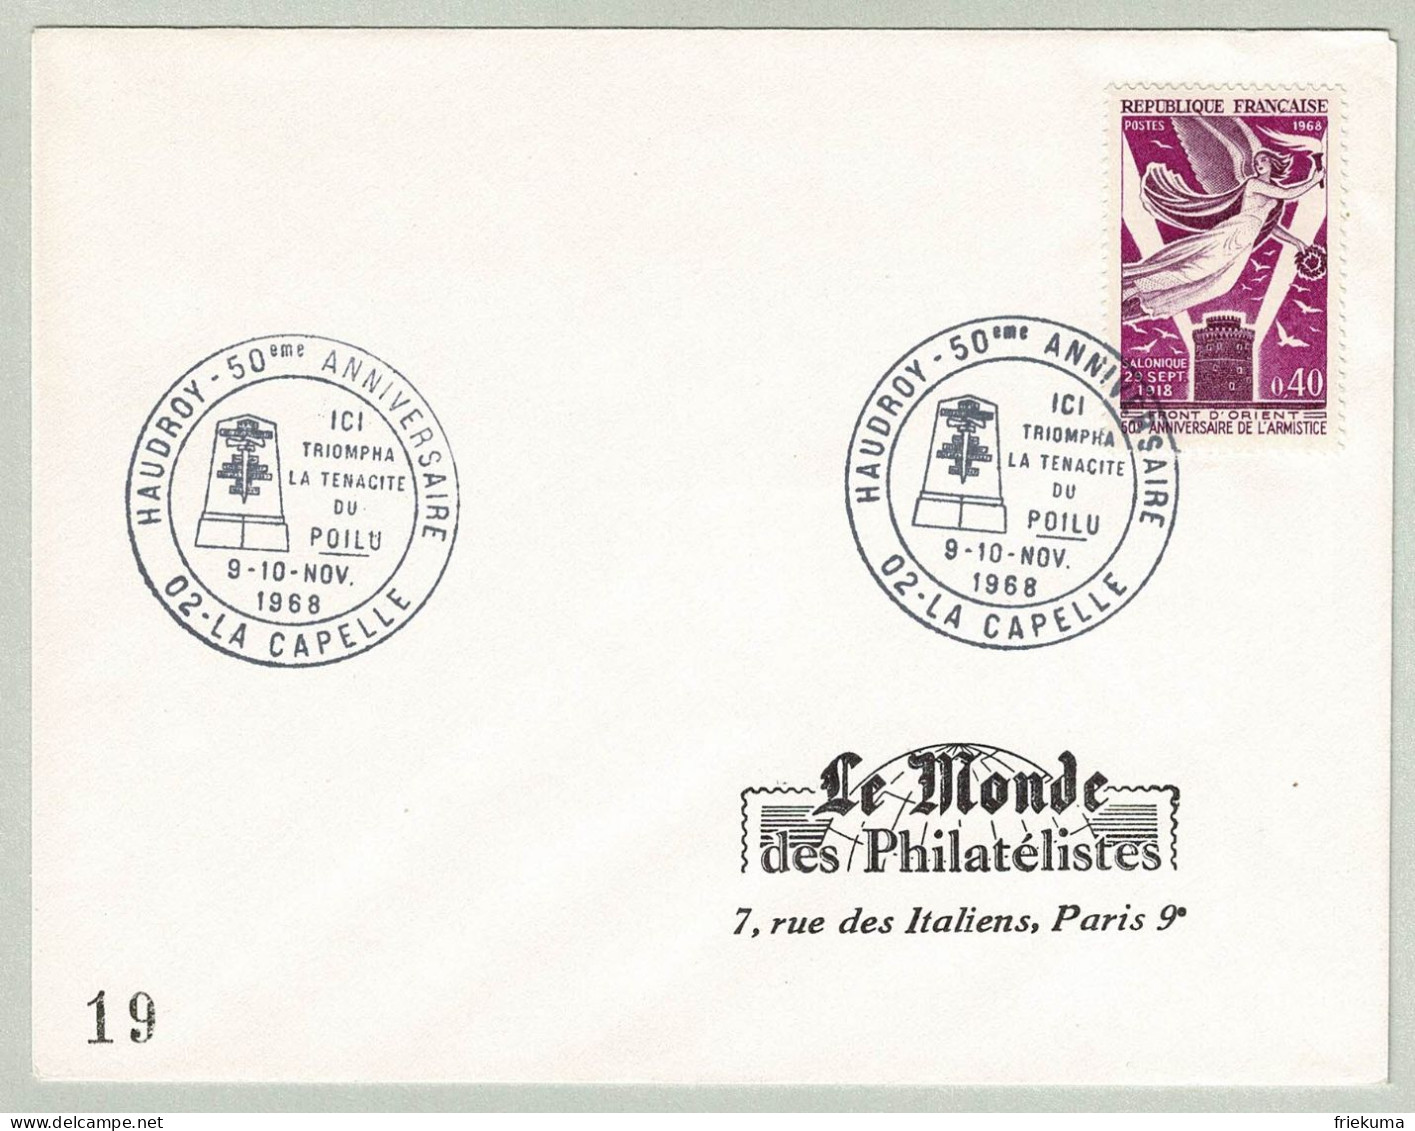 Frankreich / France 1968, Brief La Capelle - Paris, Gedenken Waffenstillstand, Monument - Guerre Mondiale (Première)